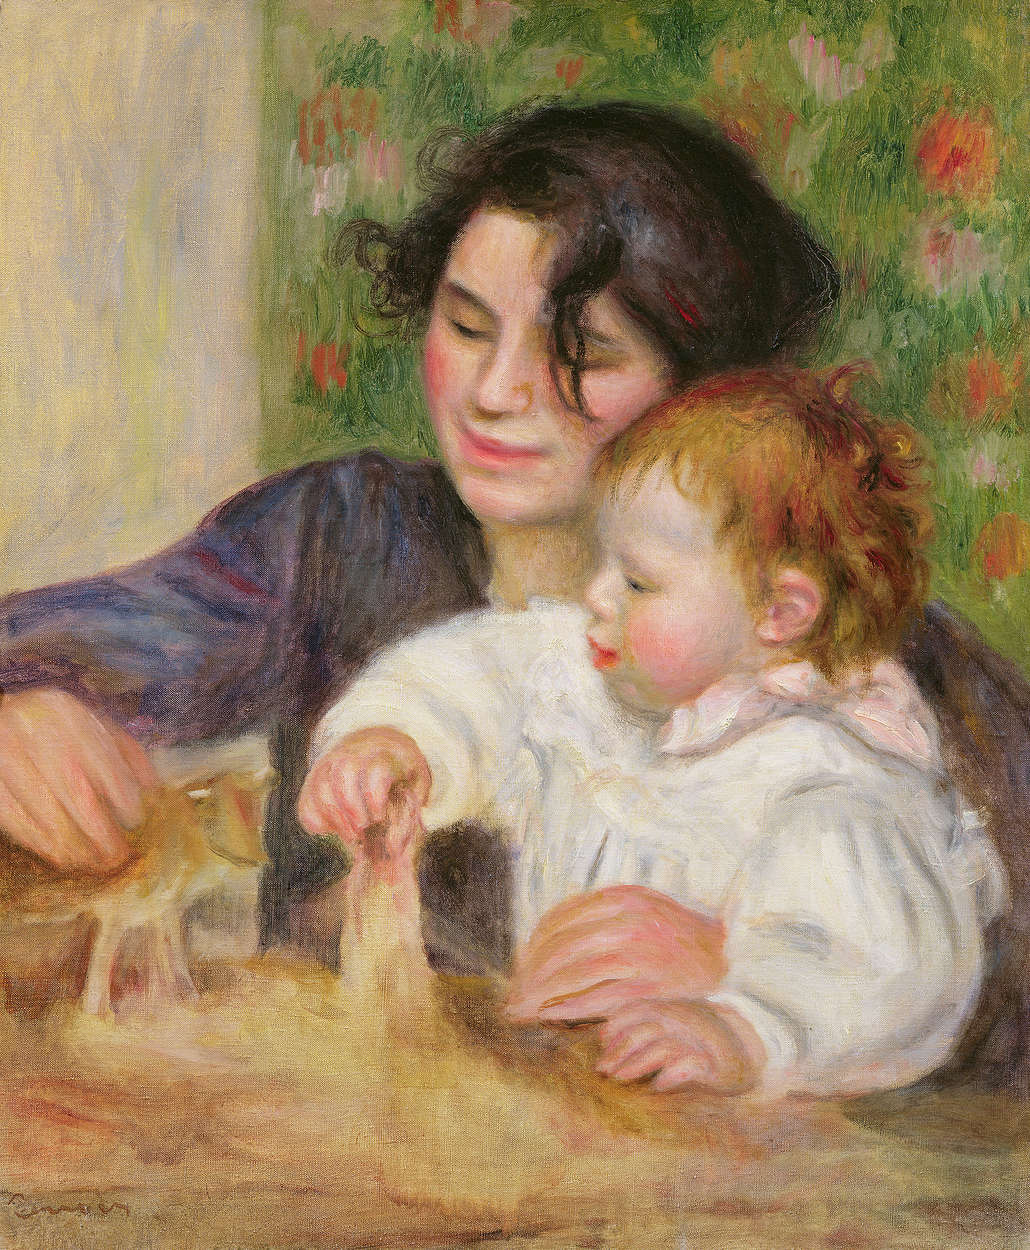             Mural "Gabrielle y Jean" de Pierre Auguste Renoir
        